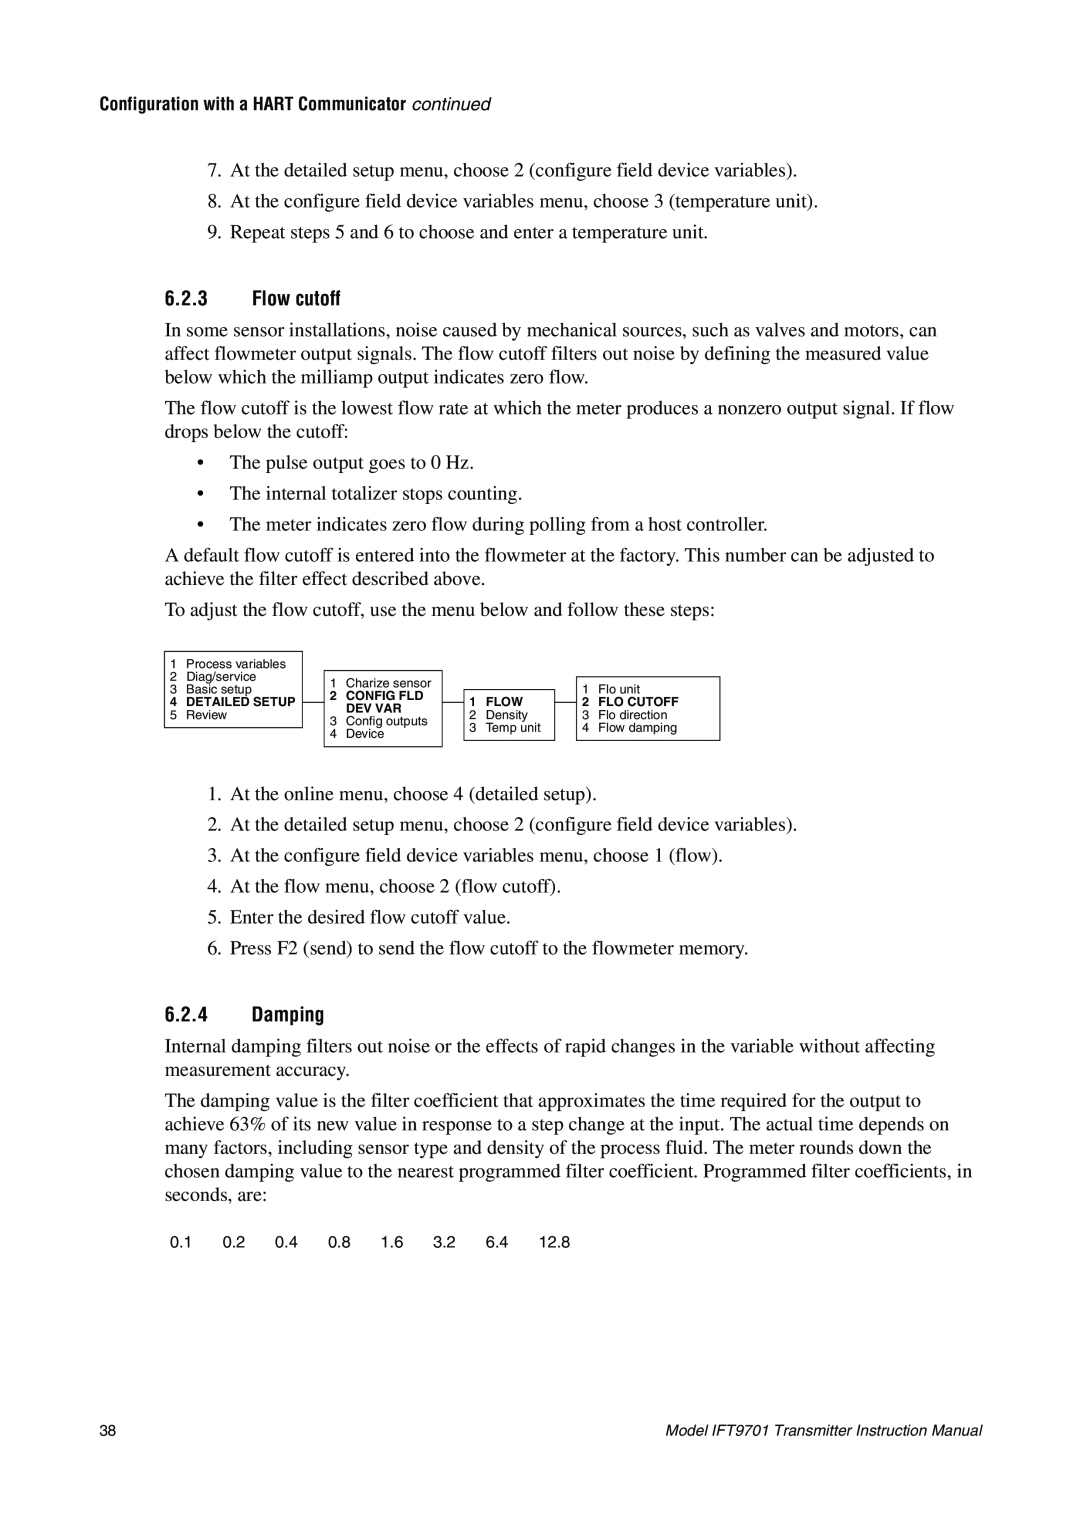 Emerson IFT9701 instruction manual 6.2.3Flow cutoff, 6.2.4Damping 